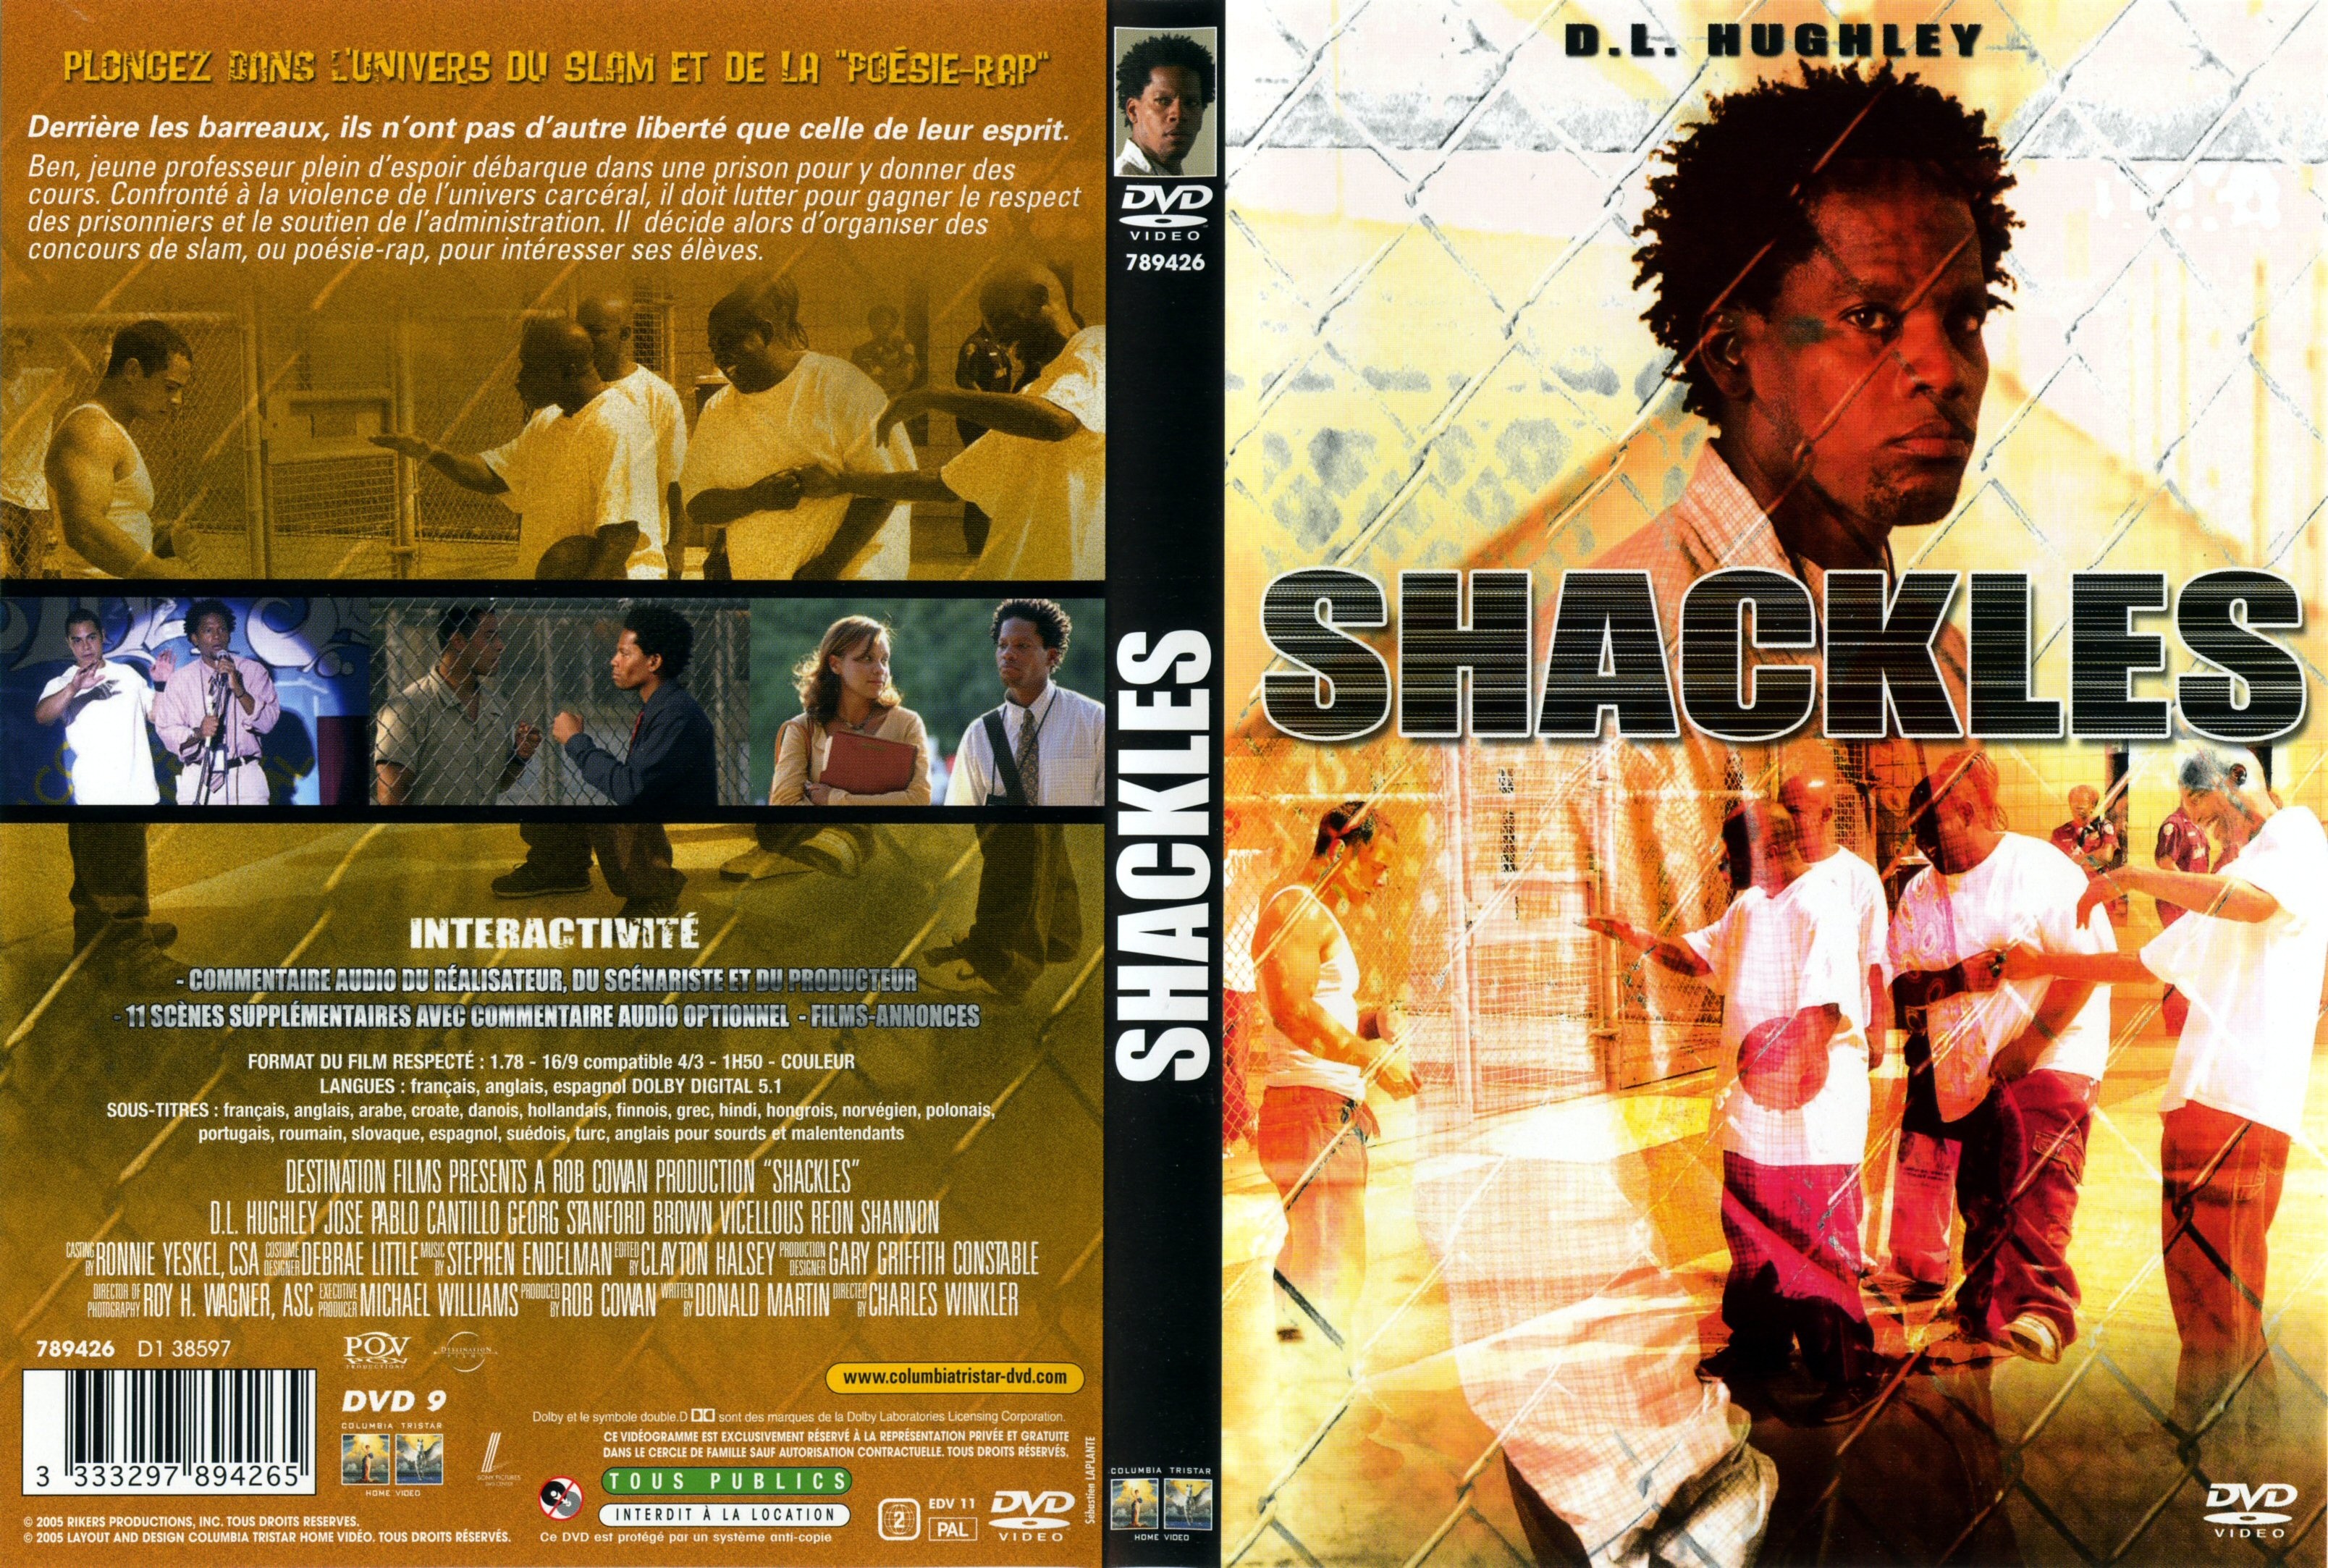 Jaquette DVD Shackles